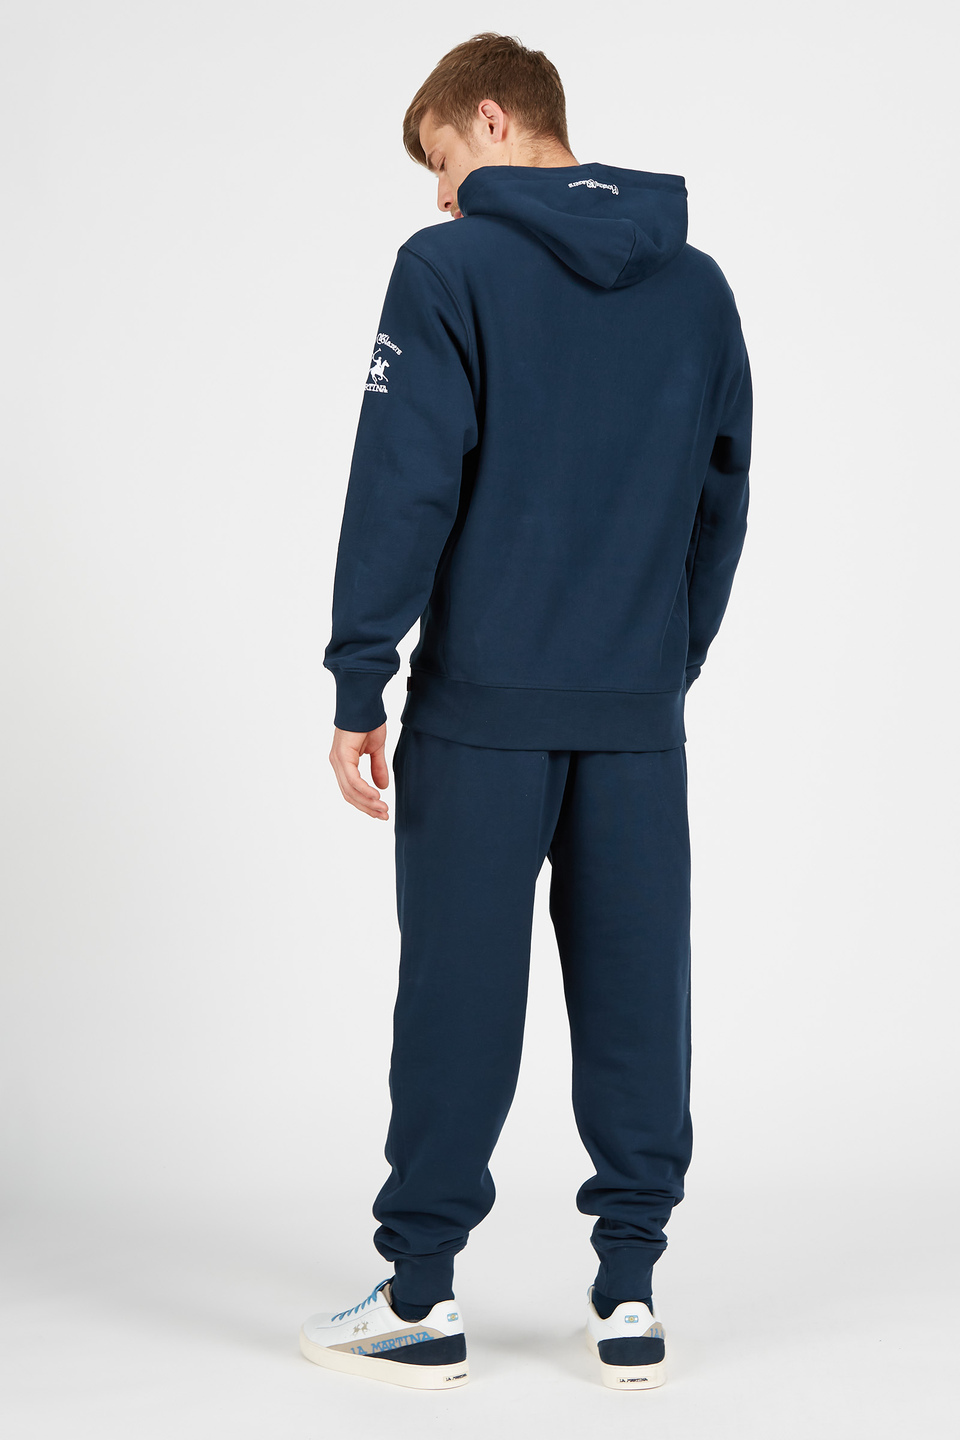 Comfort fit hooded sweatshirt - La Martina - Official Online Shop